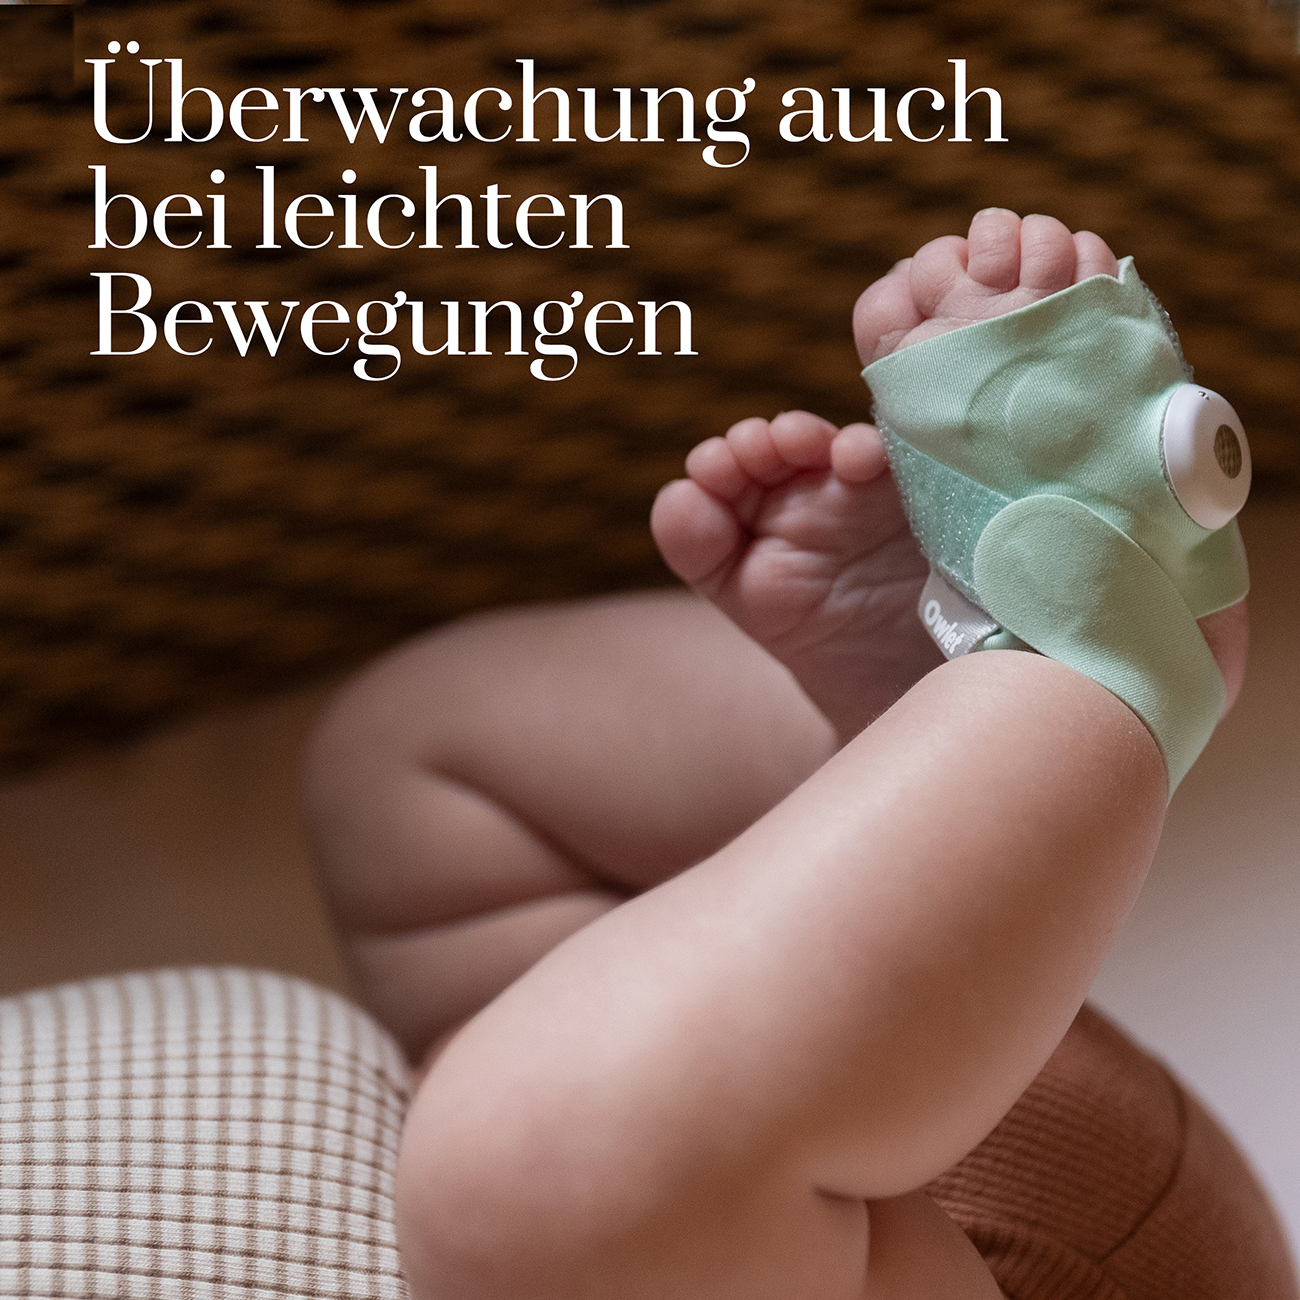 OWLET Smart Sock Baby Monitor